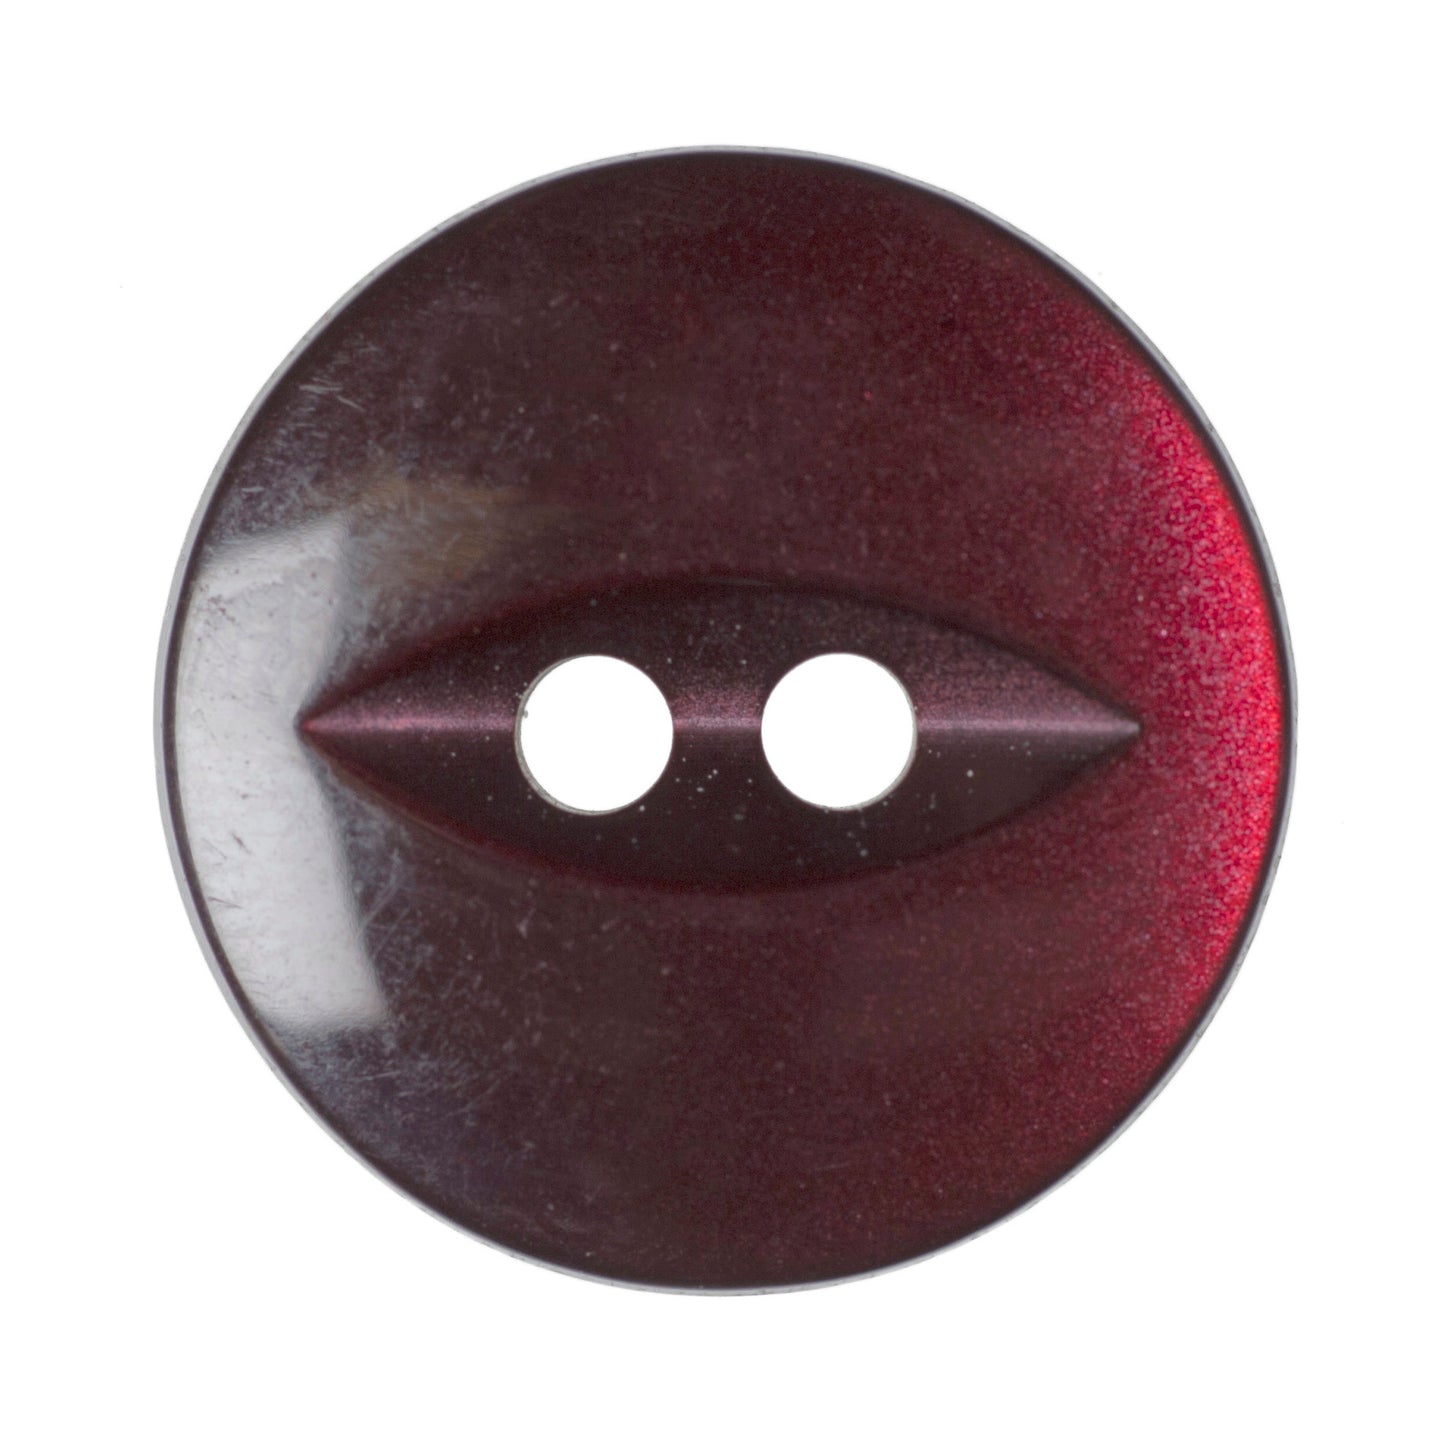 Fish Eye Button - Burgundy 16mm